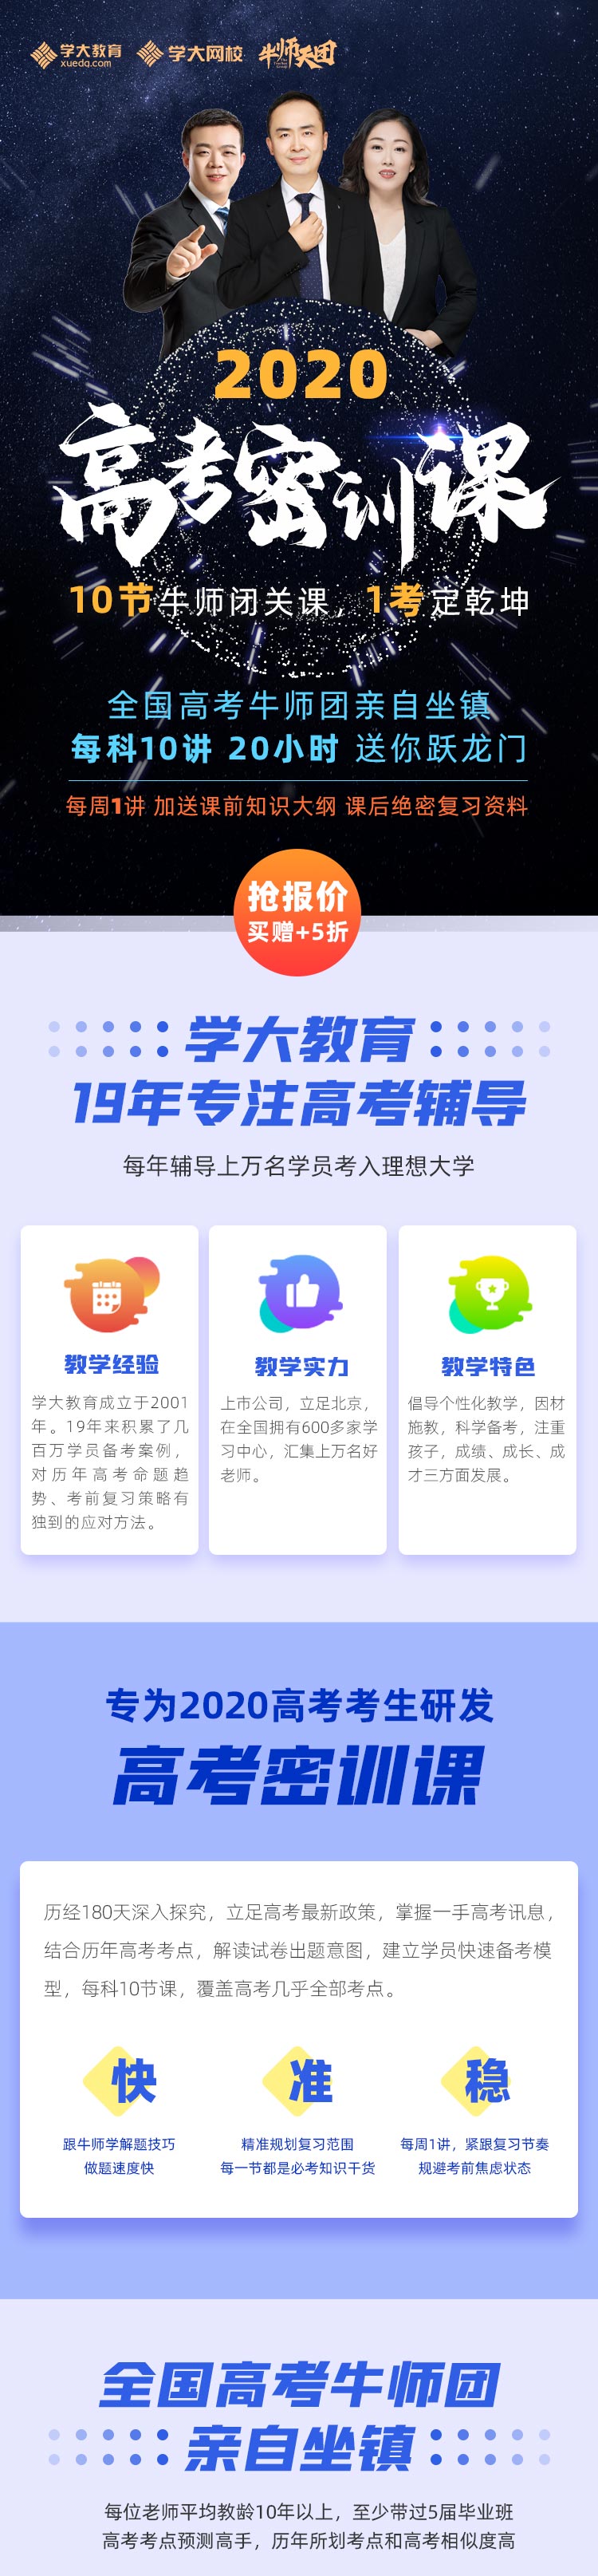 https://xdo-storage.oss-cn-beijing.aliyuncs.com/2020/03/09/lLO9eBG54Rg4QusReVe7b0QKu8HCvt17Zc5dTuBh.jpeg